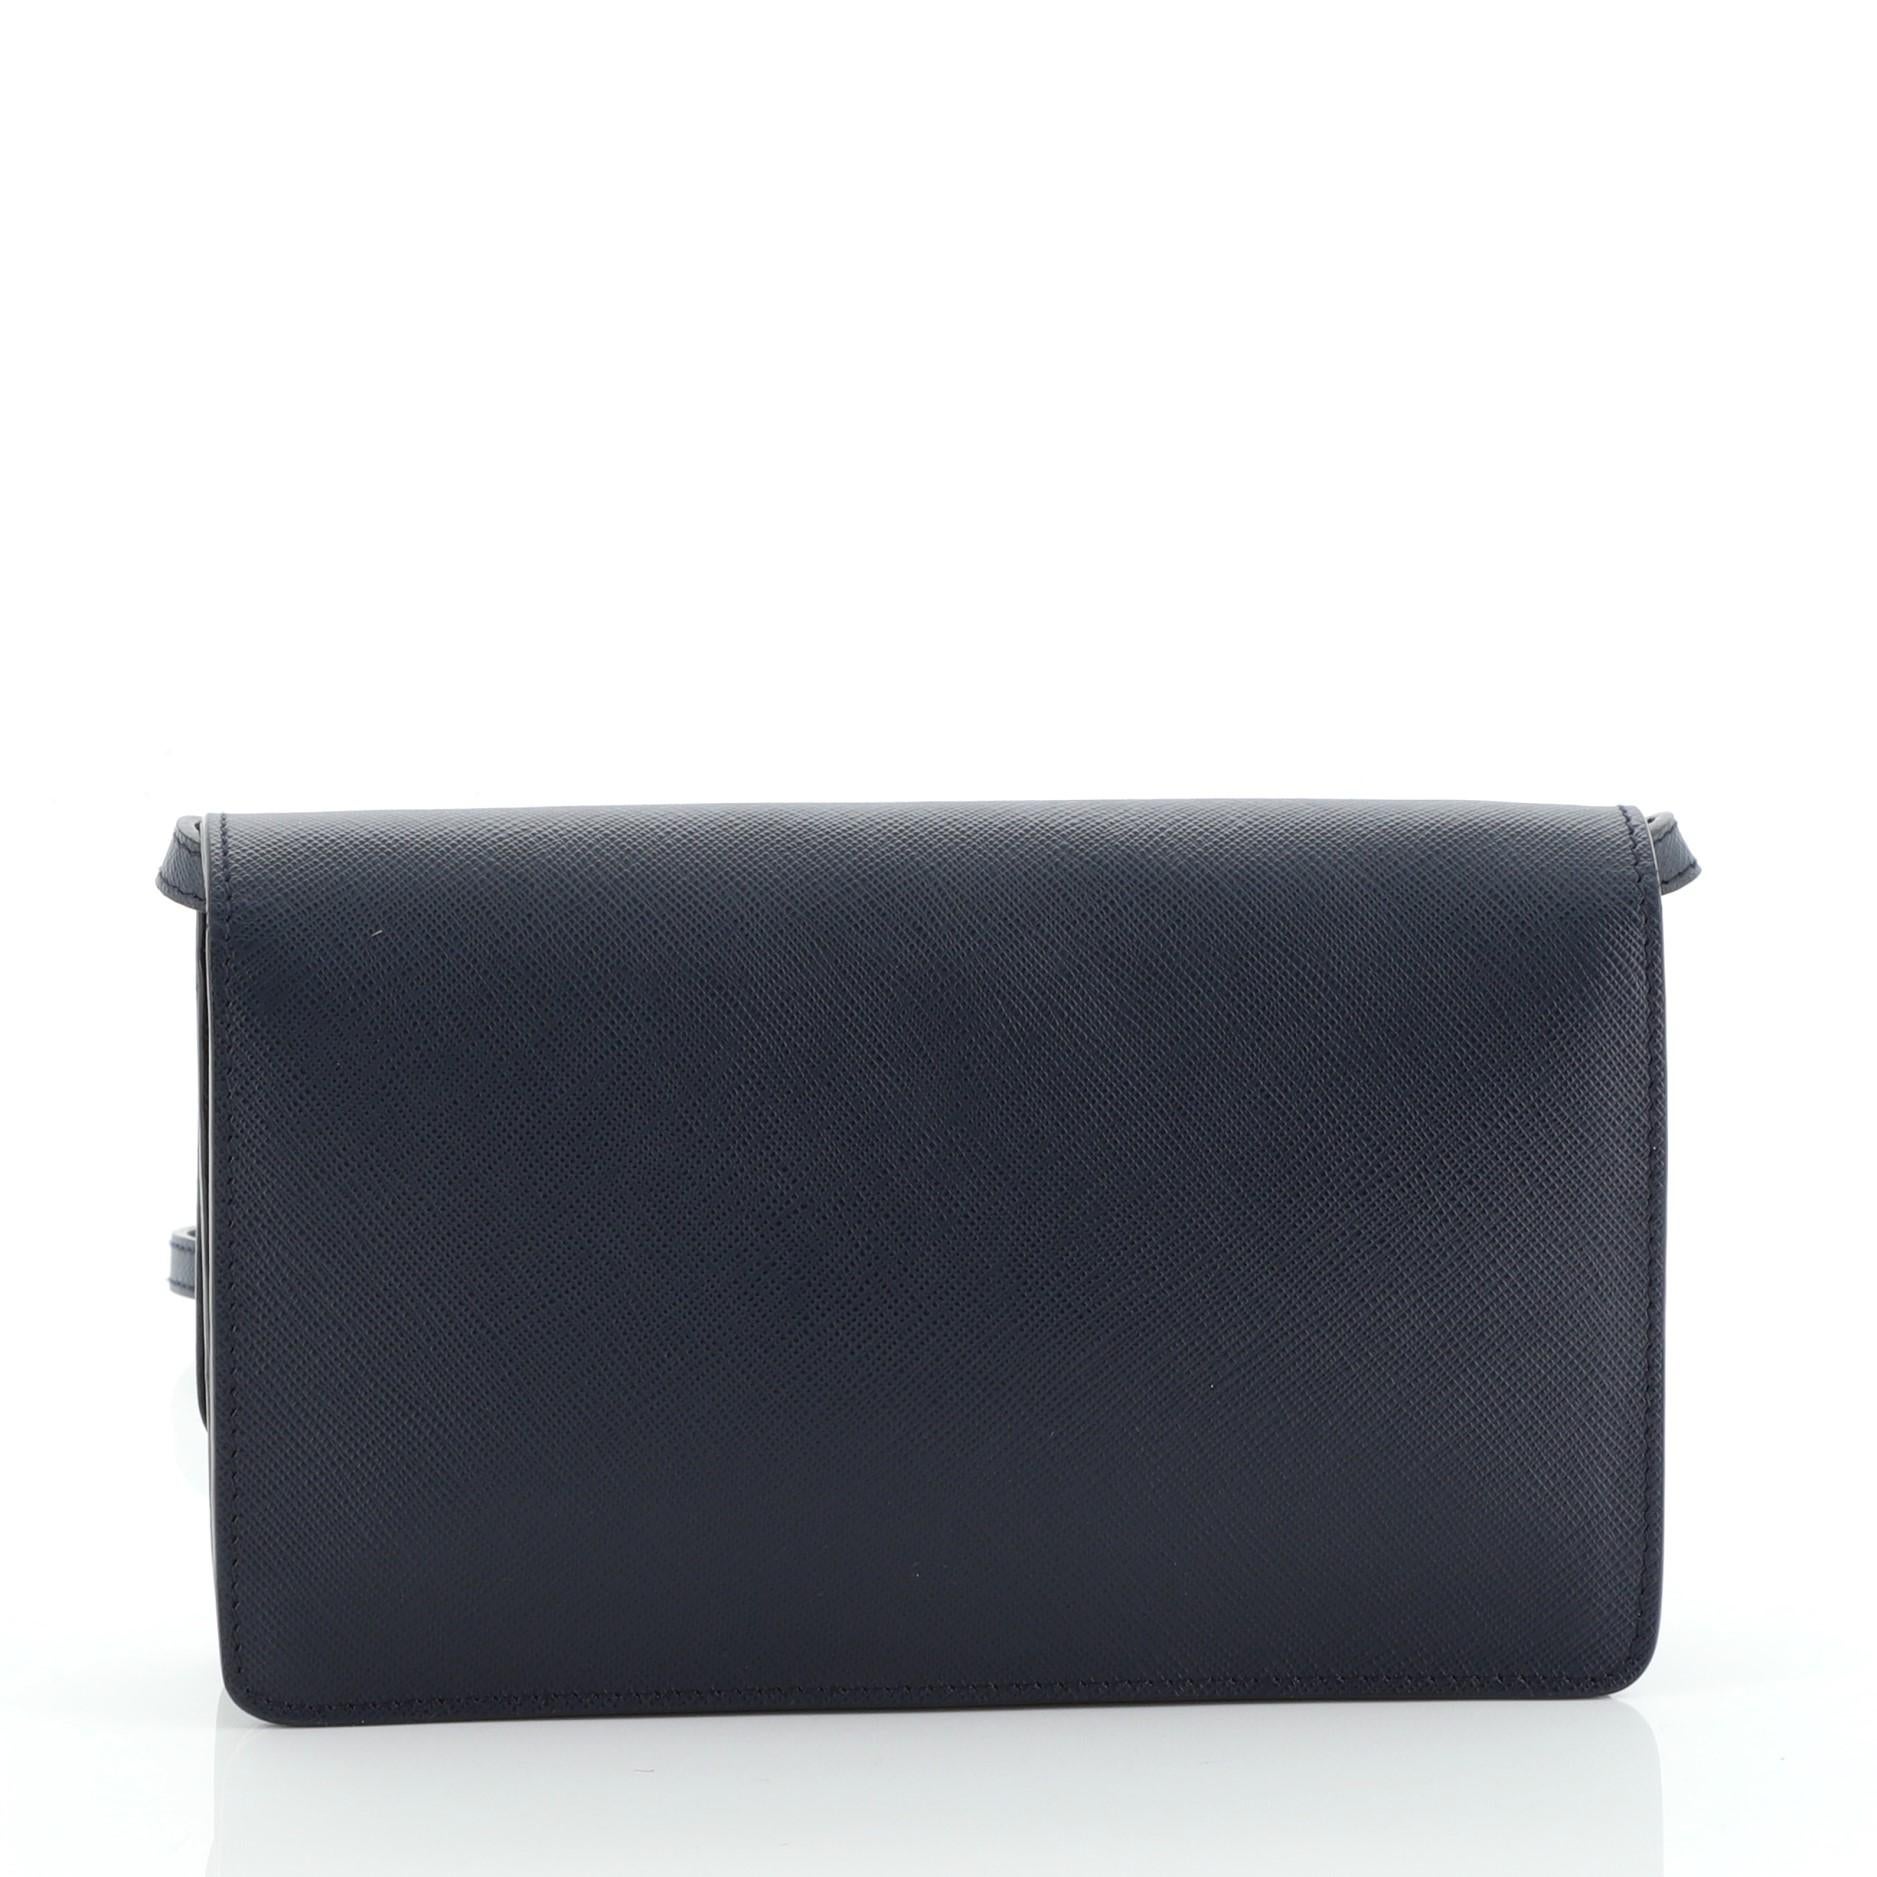 Black Prada Wallet Crossbody Saffiano Leather